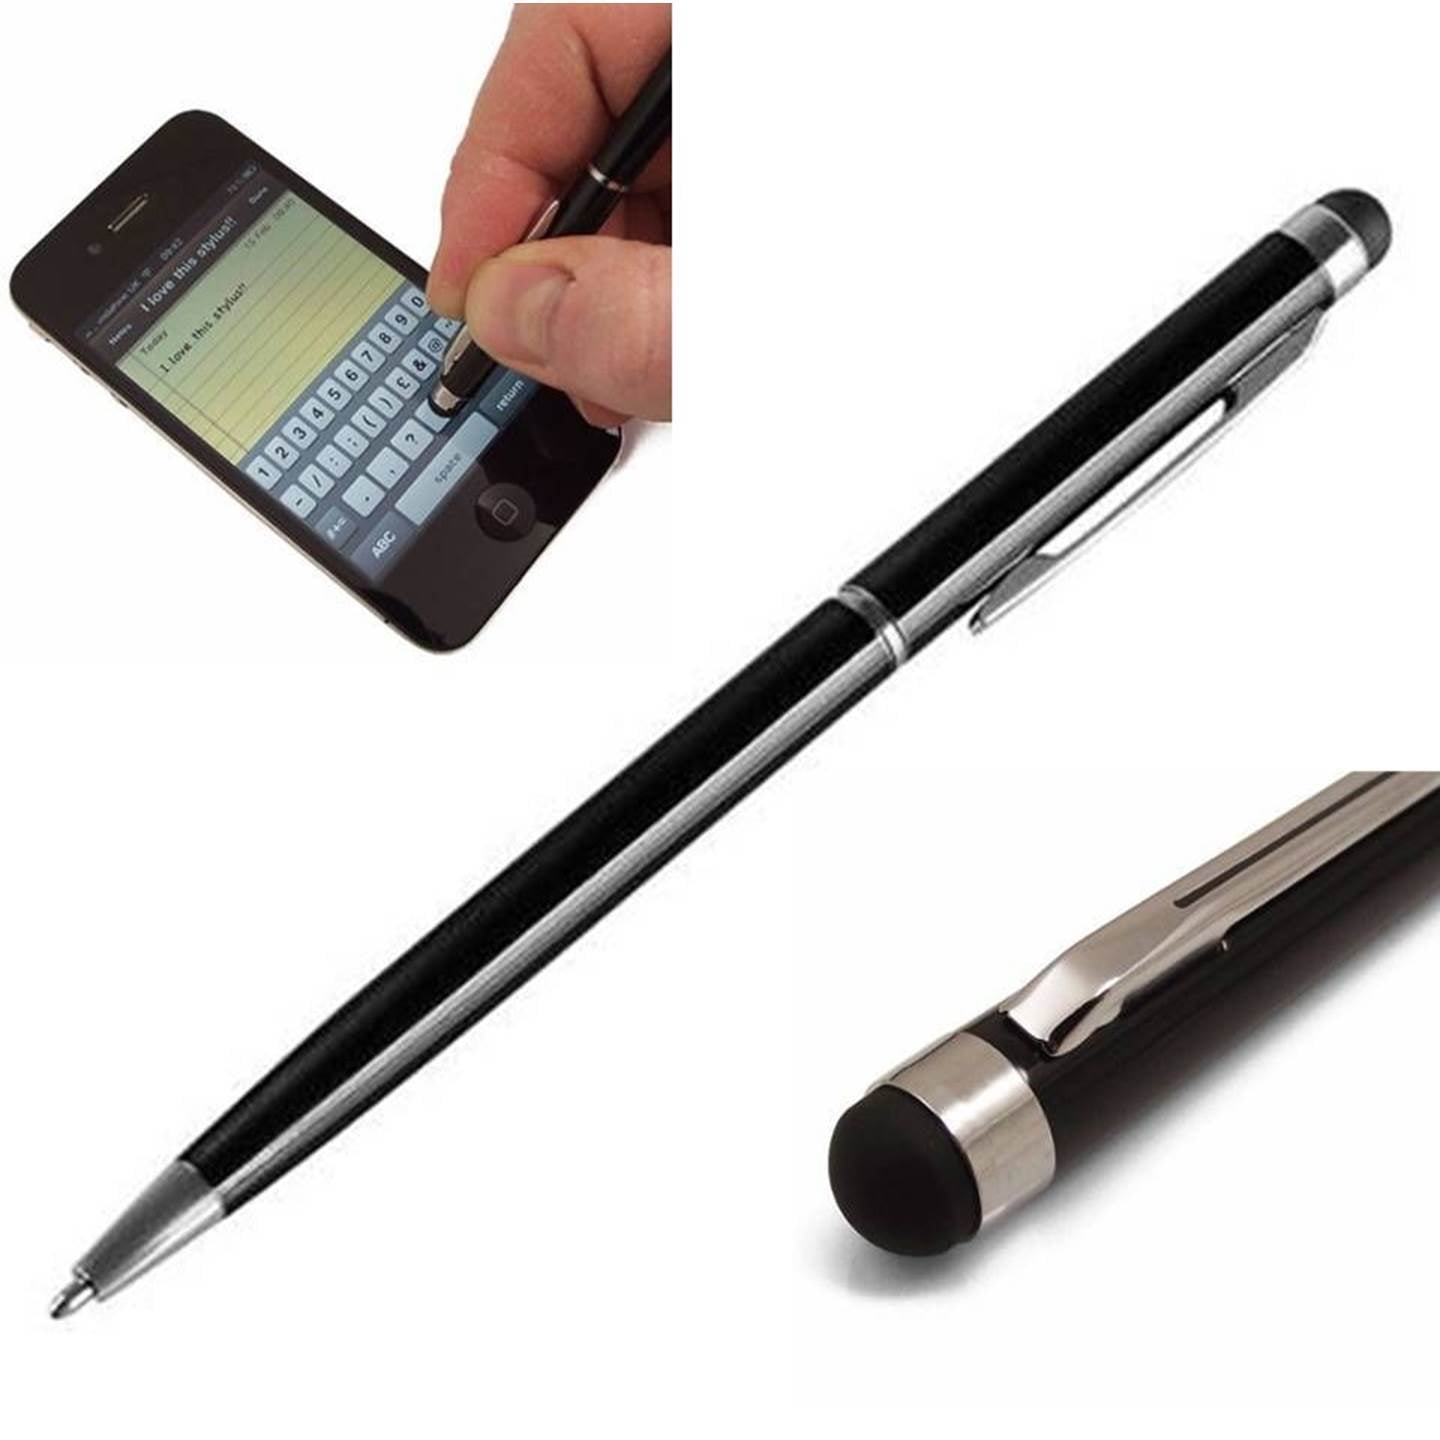 Leinuosen 48 Pcs Stylus Pens for Touch Screens 2 in 1 Stylus Ballpoint Pen  1.0 mm Black Ink Retractable Metal Pen Stylus Pen Rubberized Touch